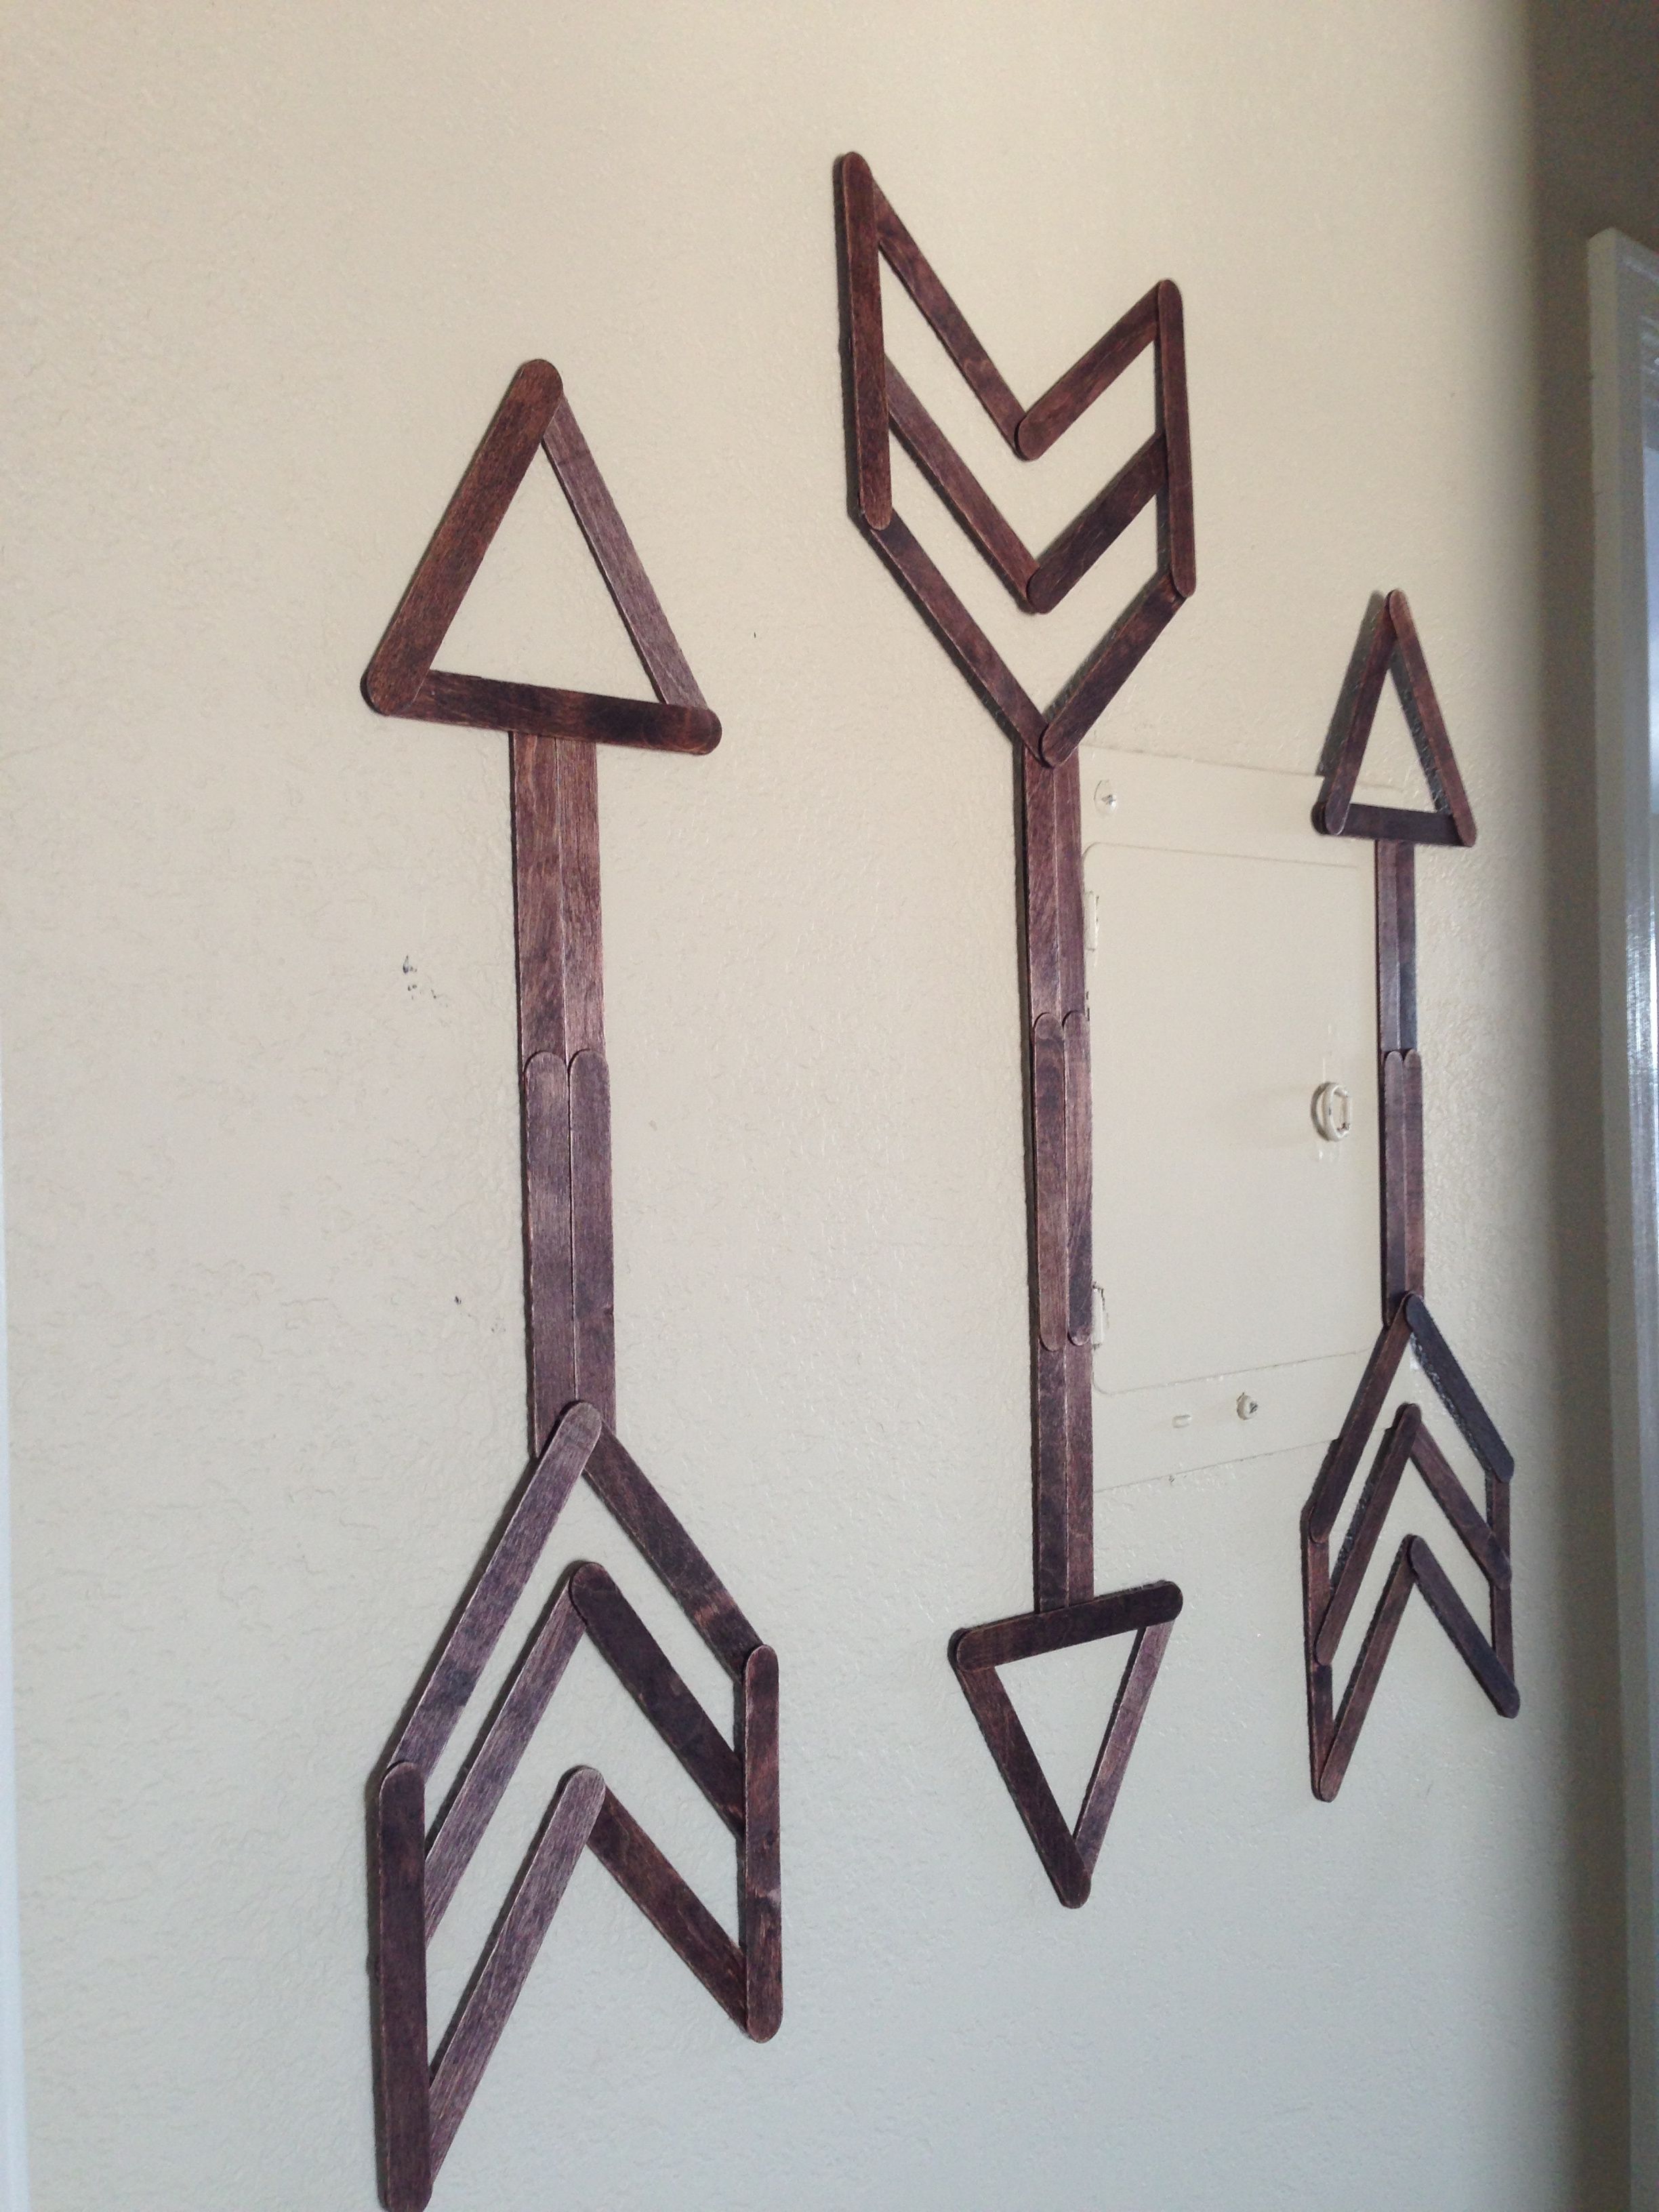 Popsicle Stick Wall Art | Walls, Craft and Stick crafts